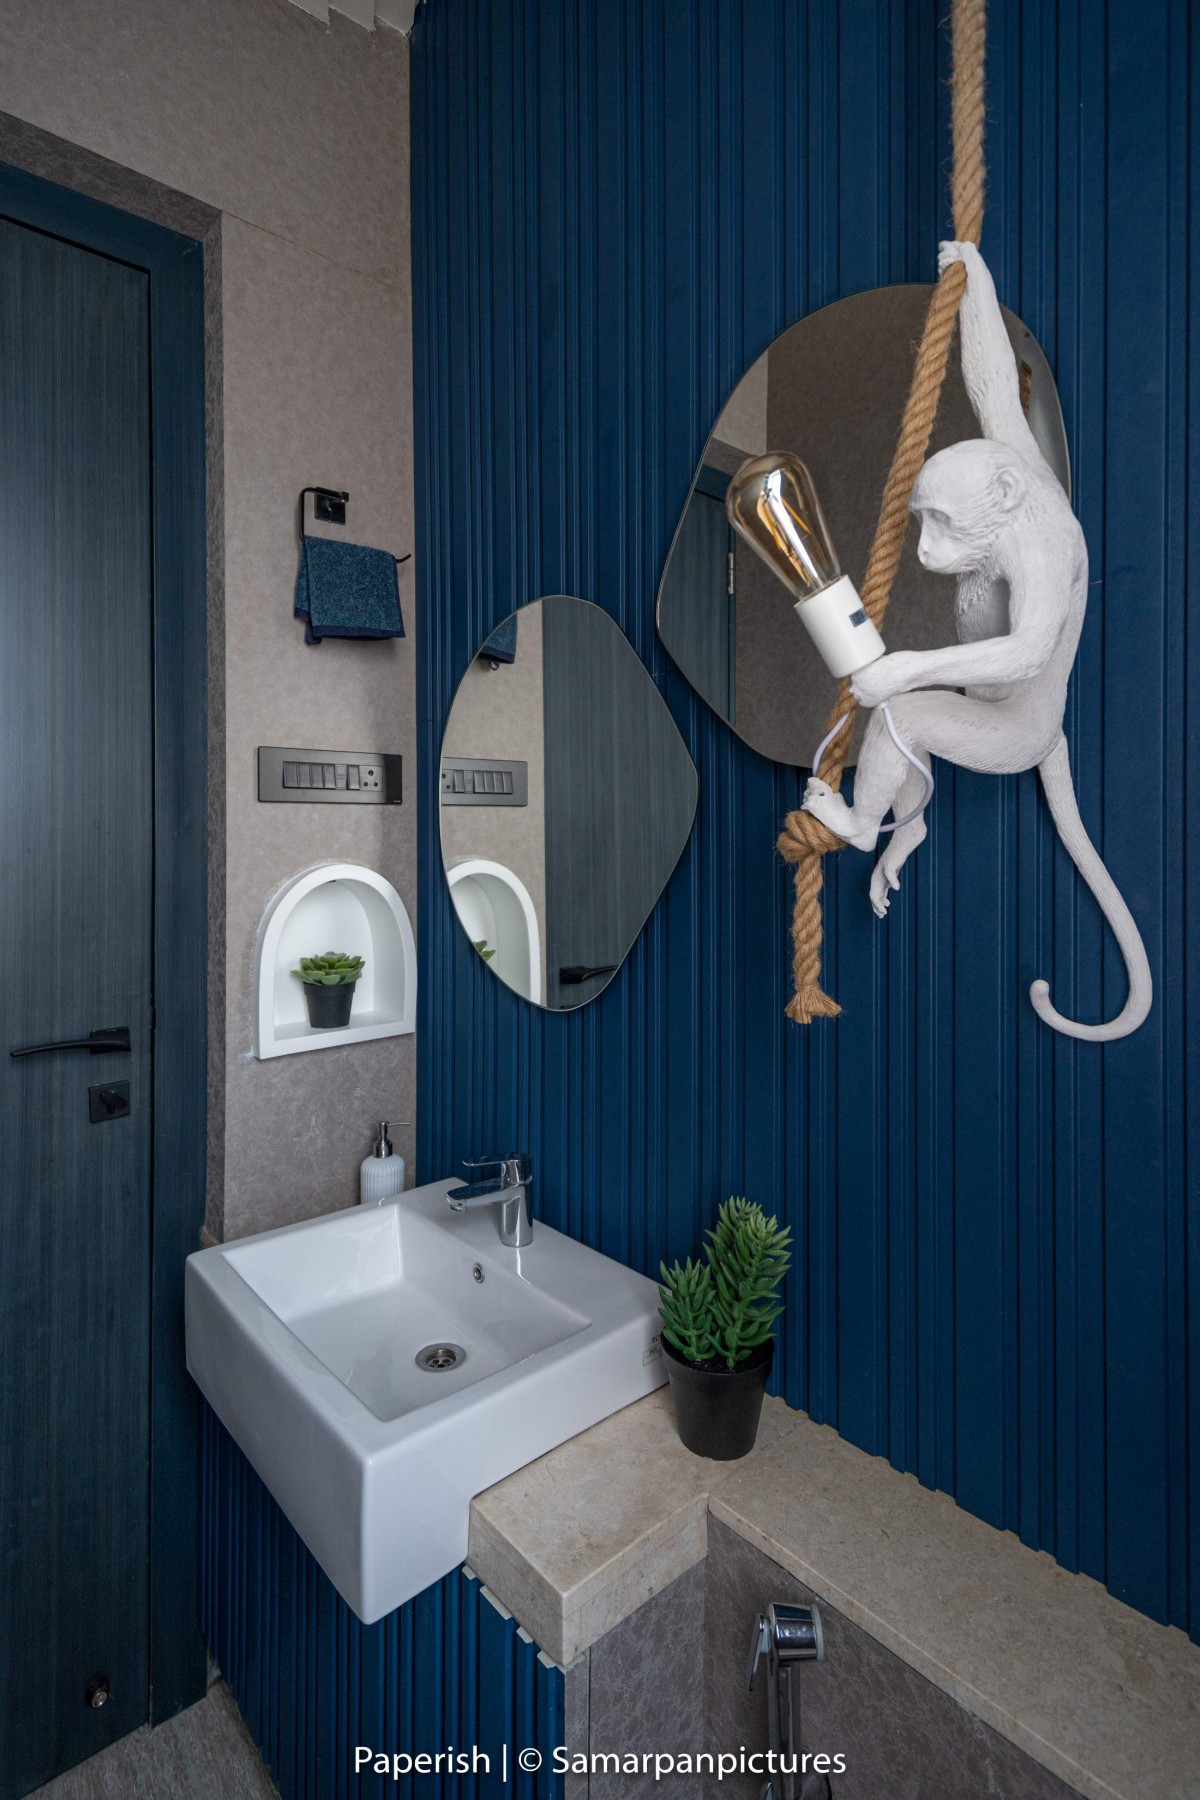 Bathroom of A Studio House by Paperish, a design studio